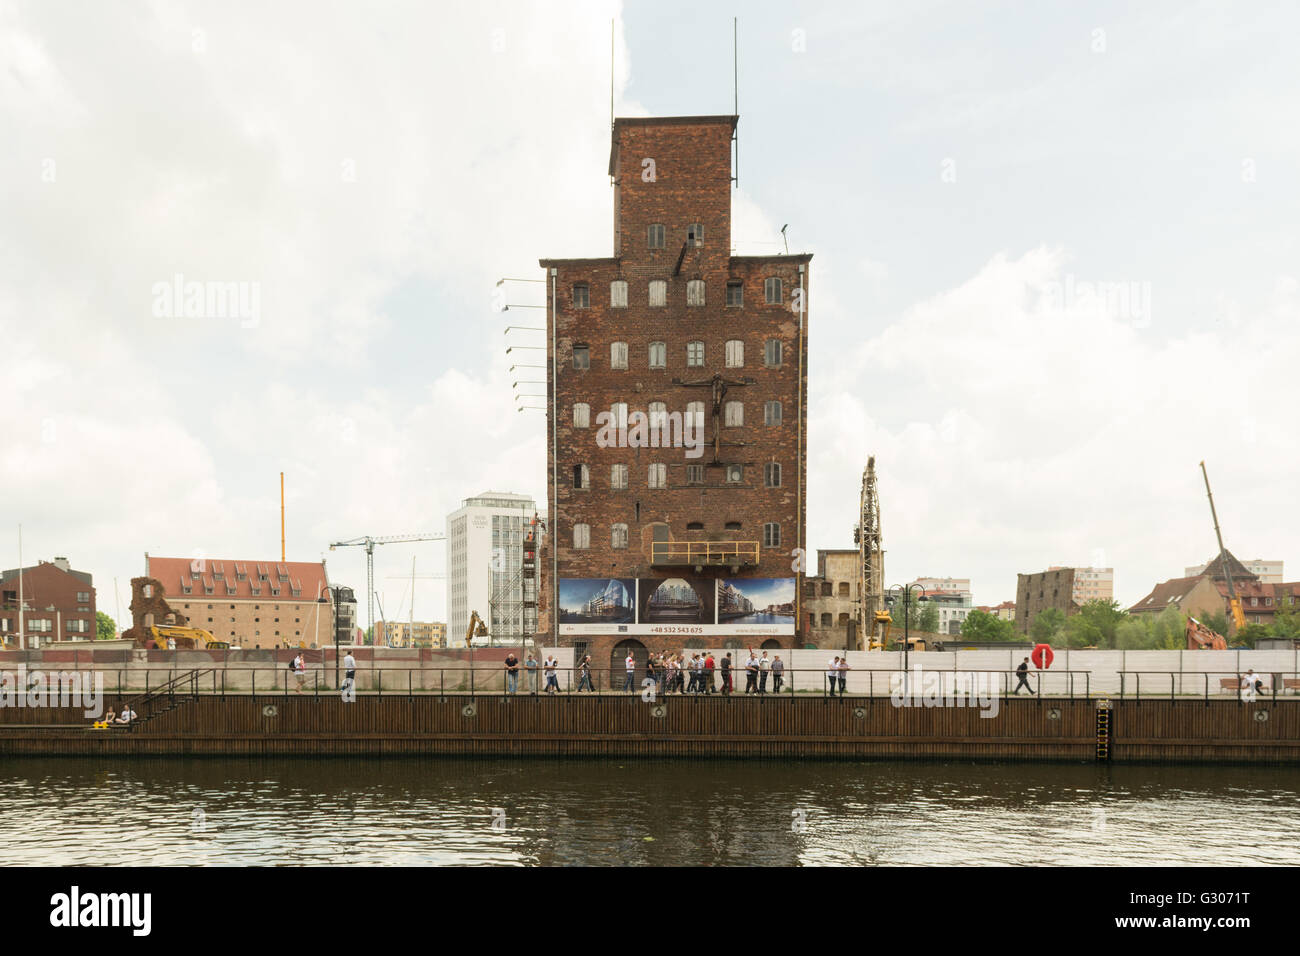 Granary Island Development Gdansk, Poland Stock Photo